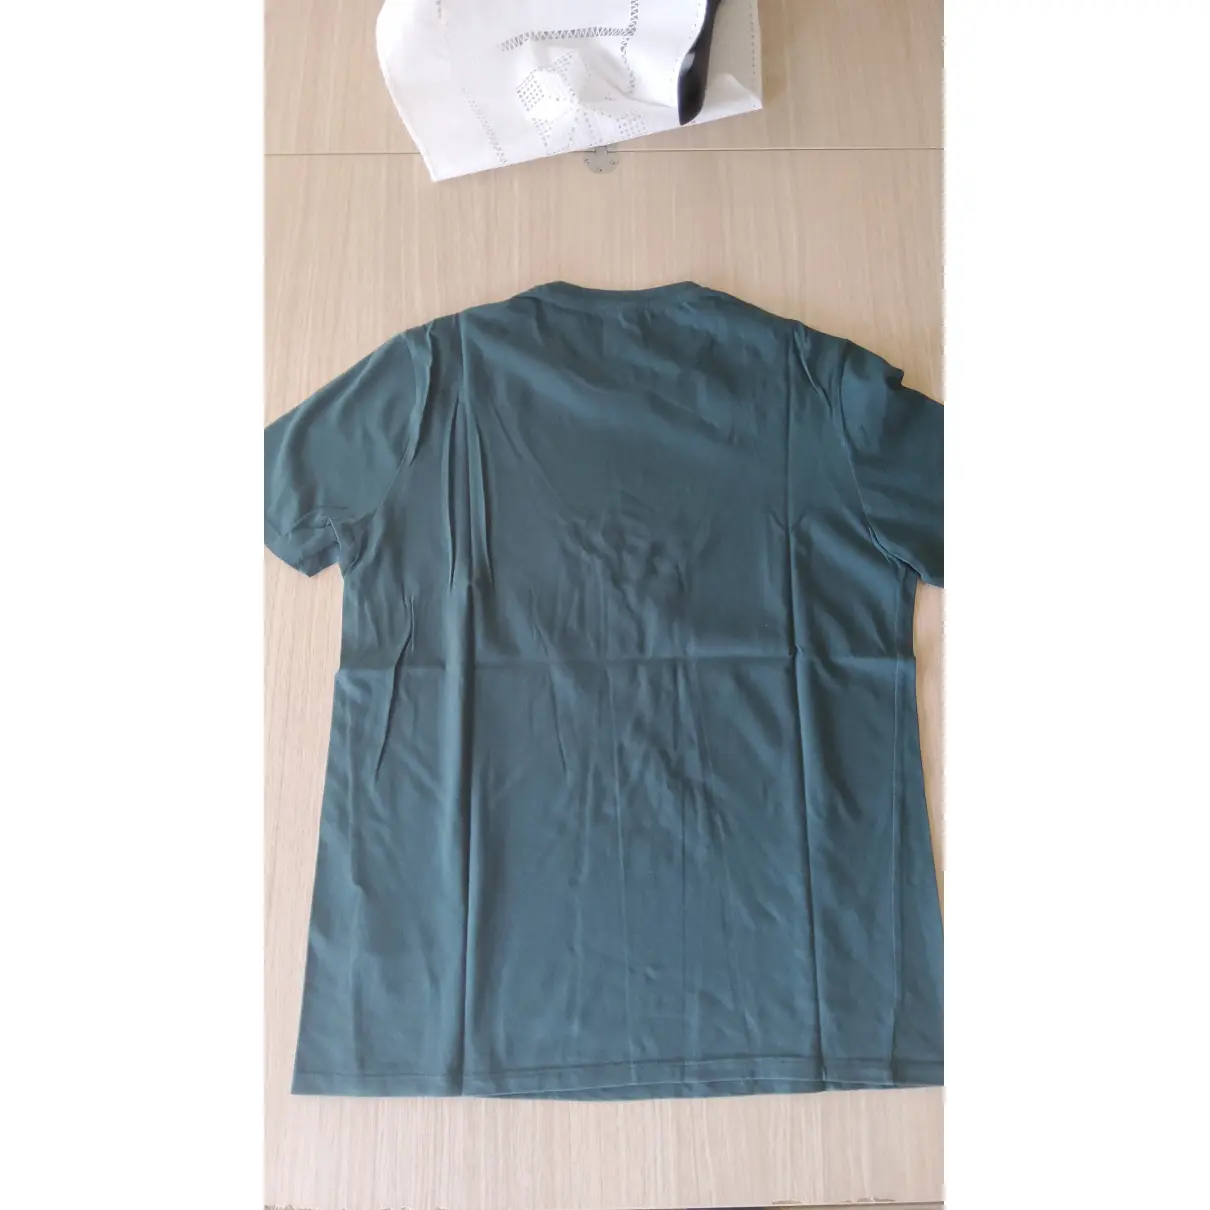 Buy Armani Jeans Green Cotton T-shirt online